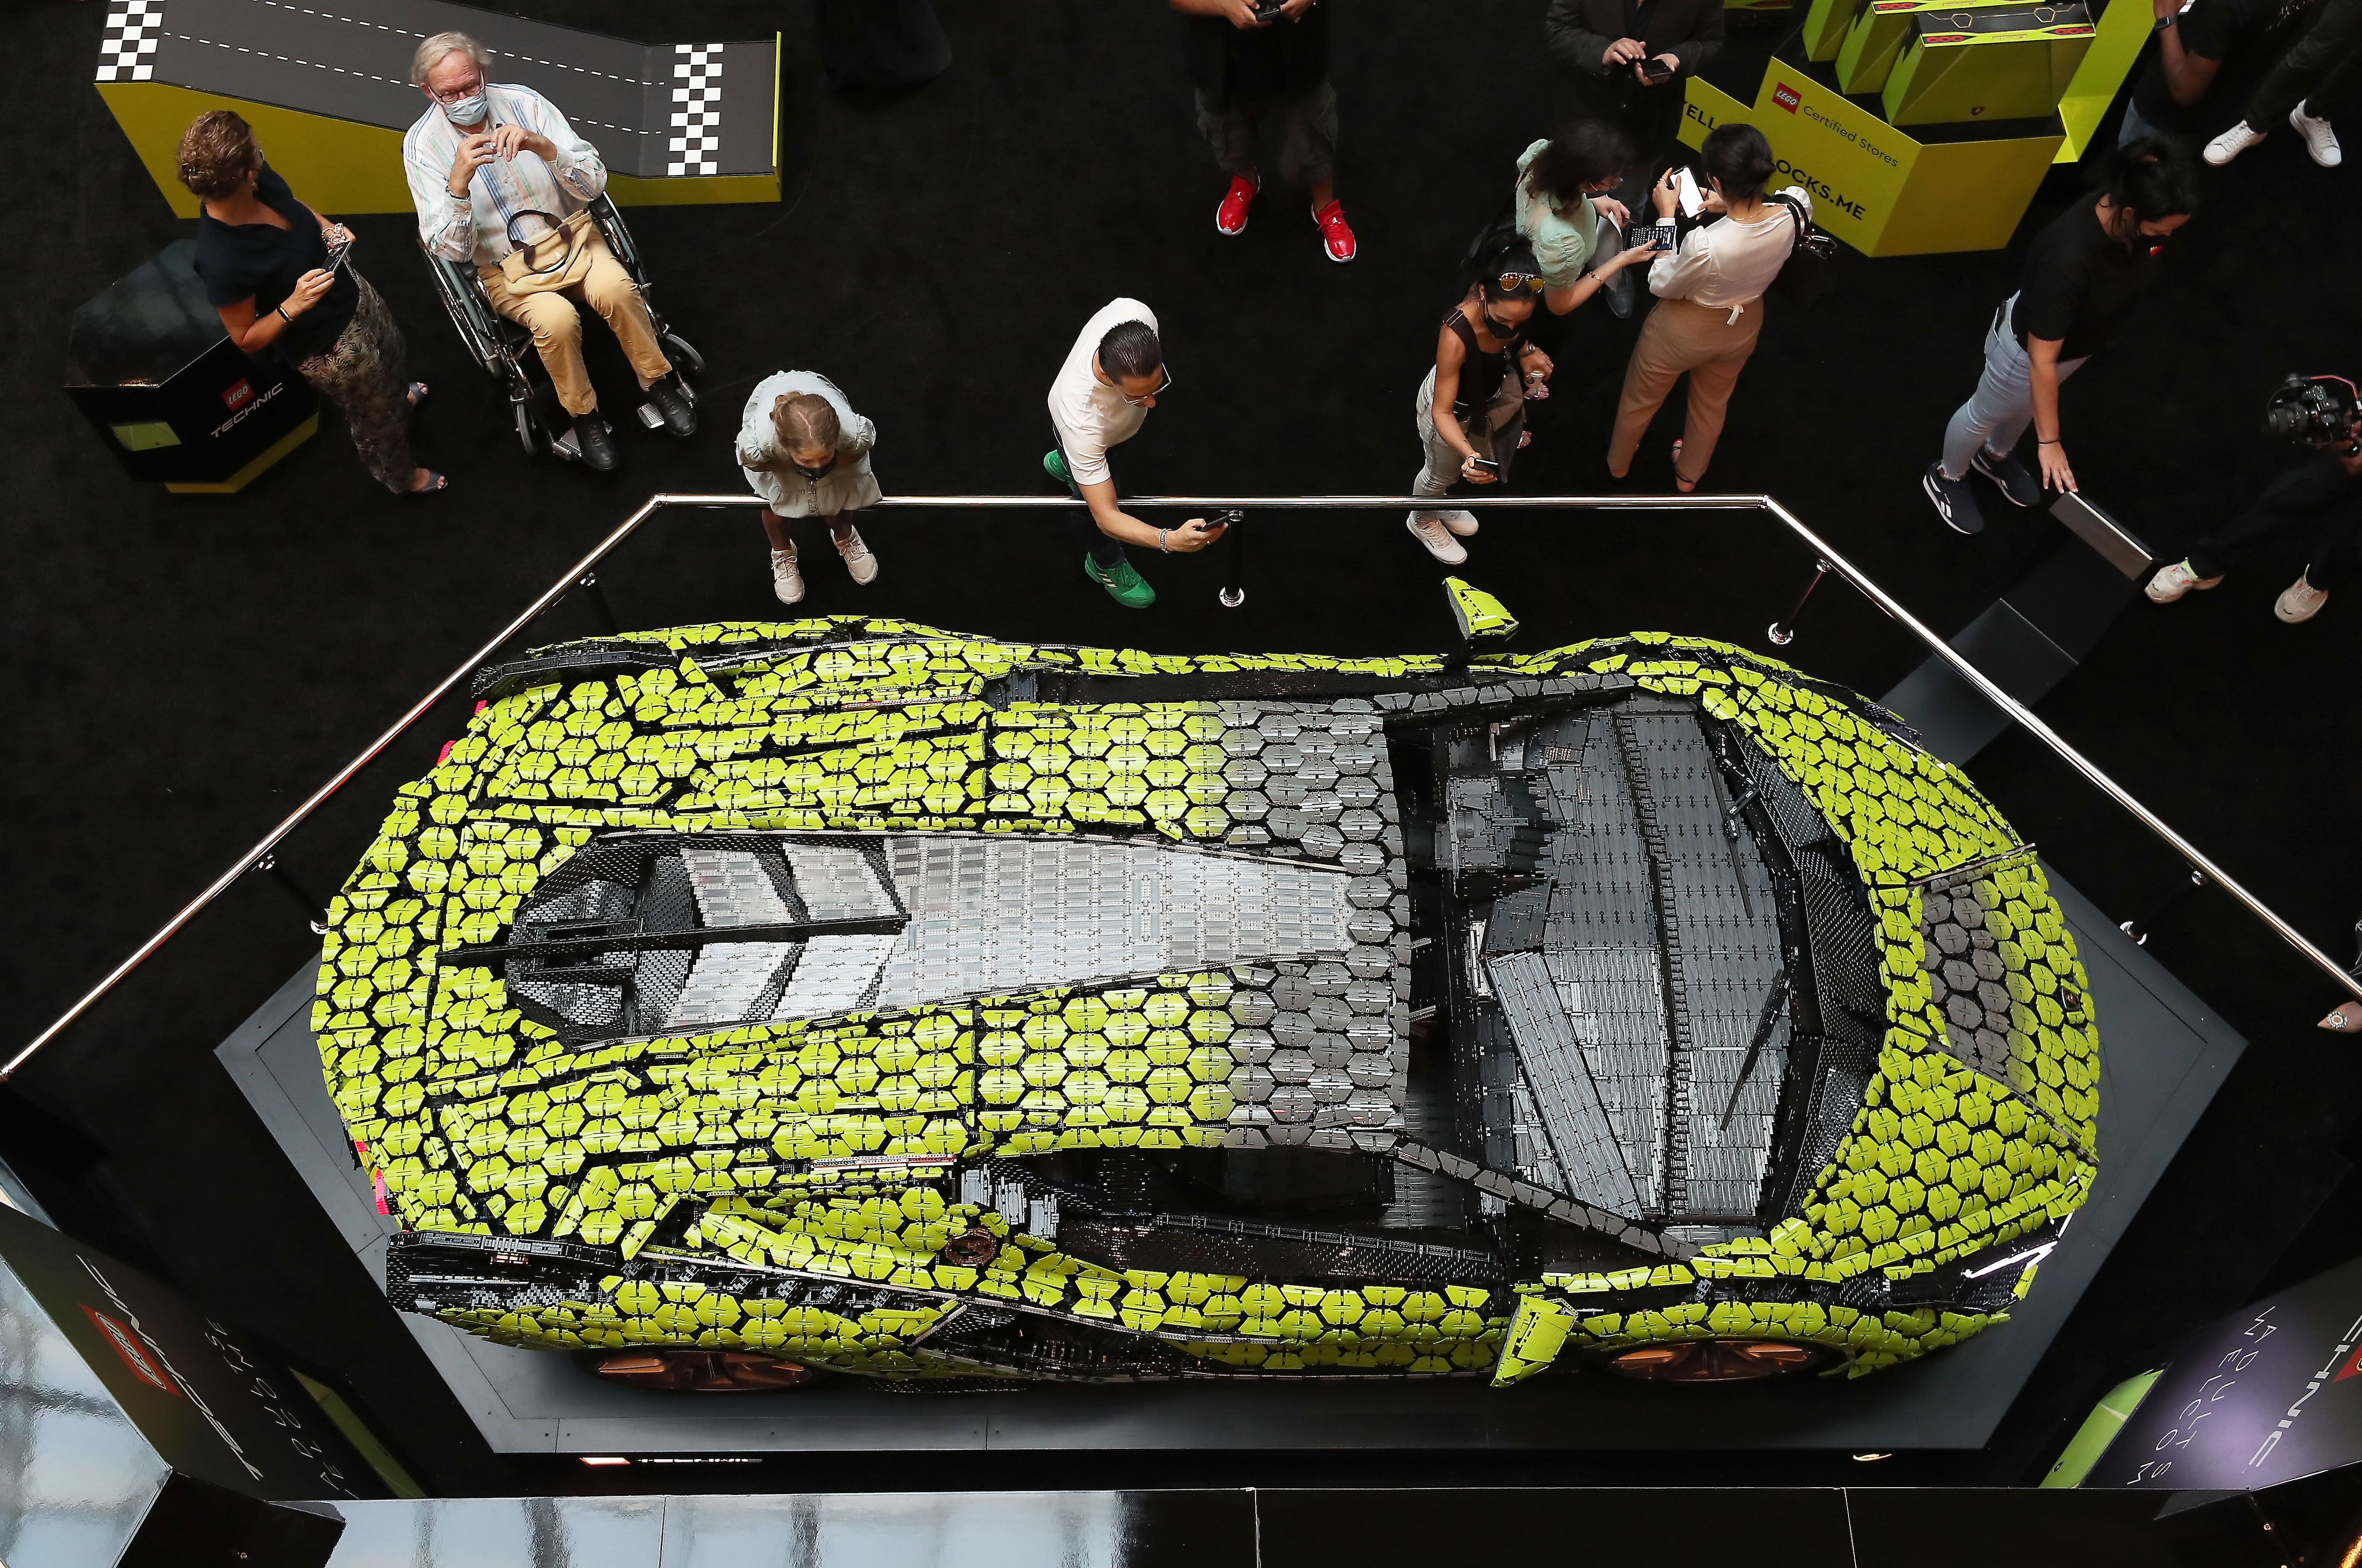 Lego's life-size Lamborghini Sian FKP 37 is now on display in Dubai